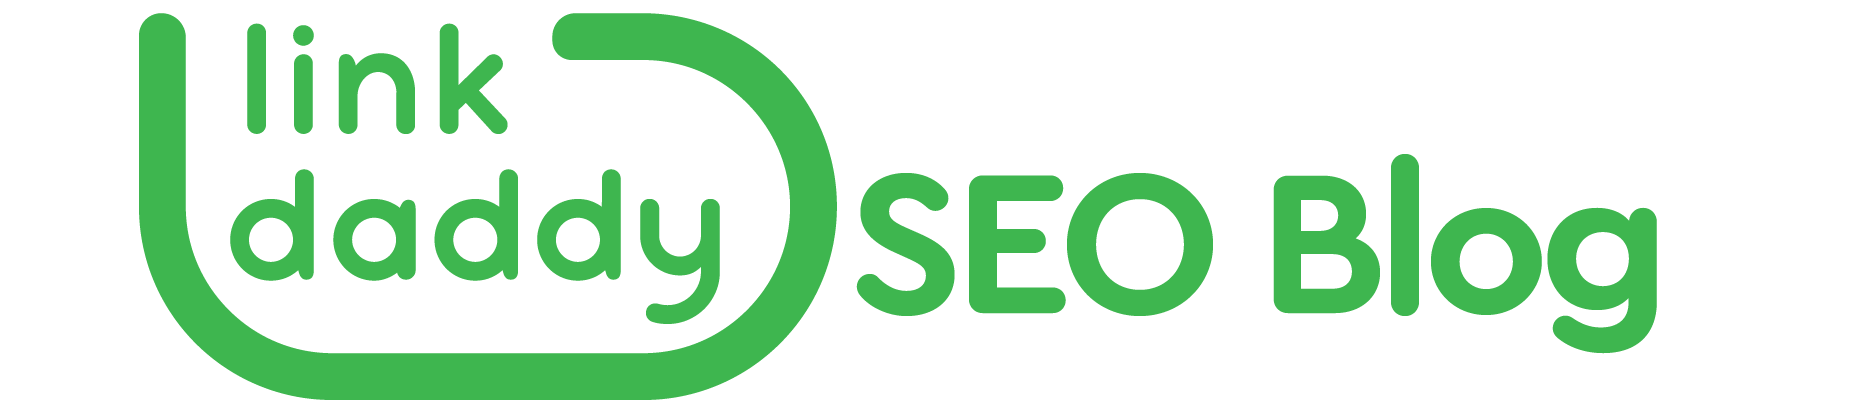 https://storage.googleapis.com/cloudsites/seo-services/867921azb/img/cropped-linkdaddy-seoblog-logo.png